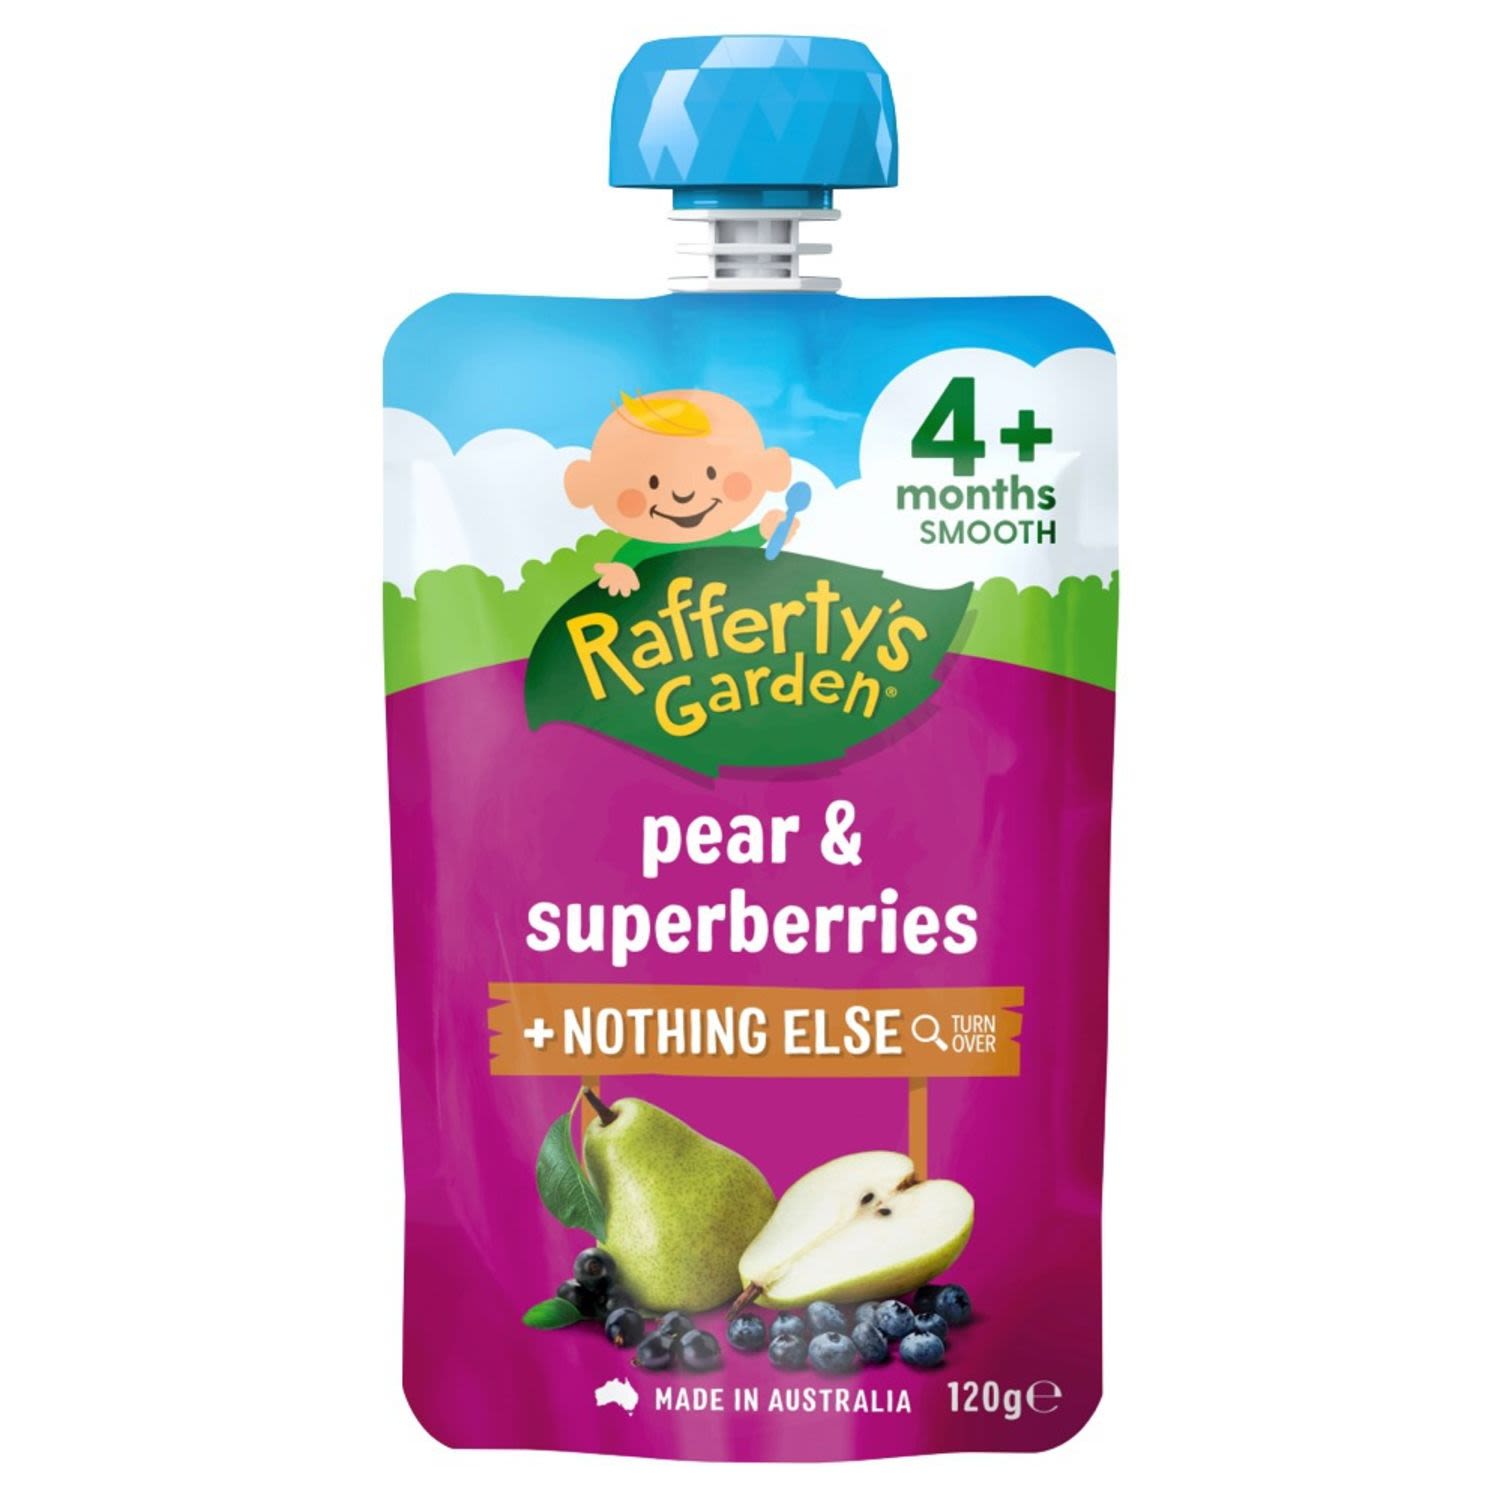 Rafferty's Garden Pear & Superberries Smooth, 120 Gram